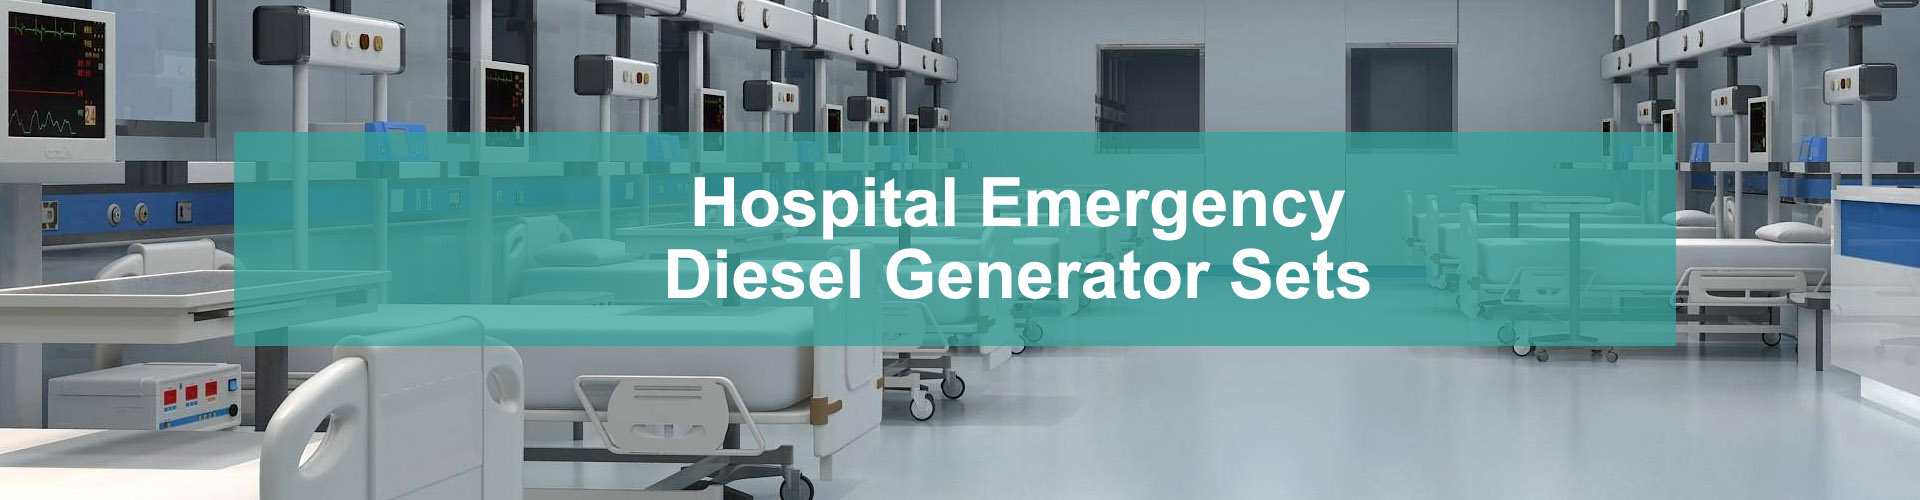 Hospital standby power generator set1